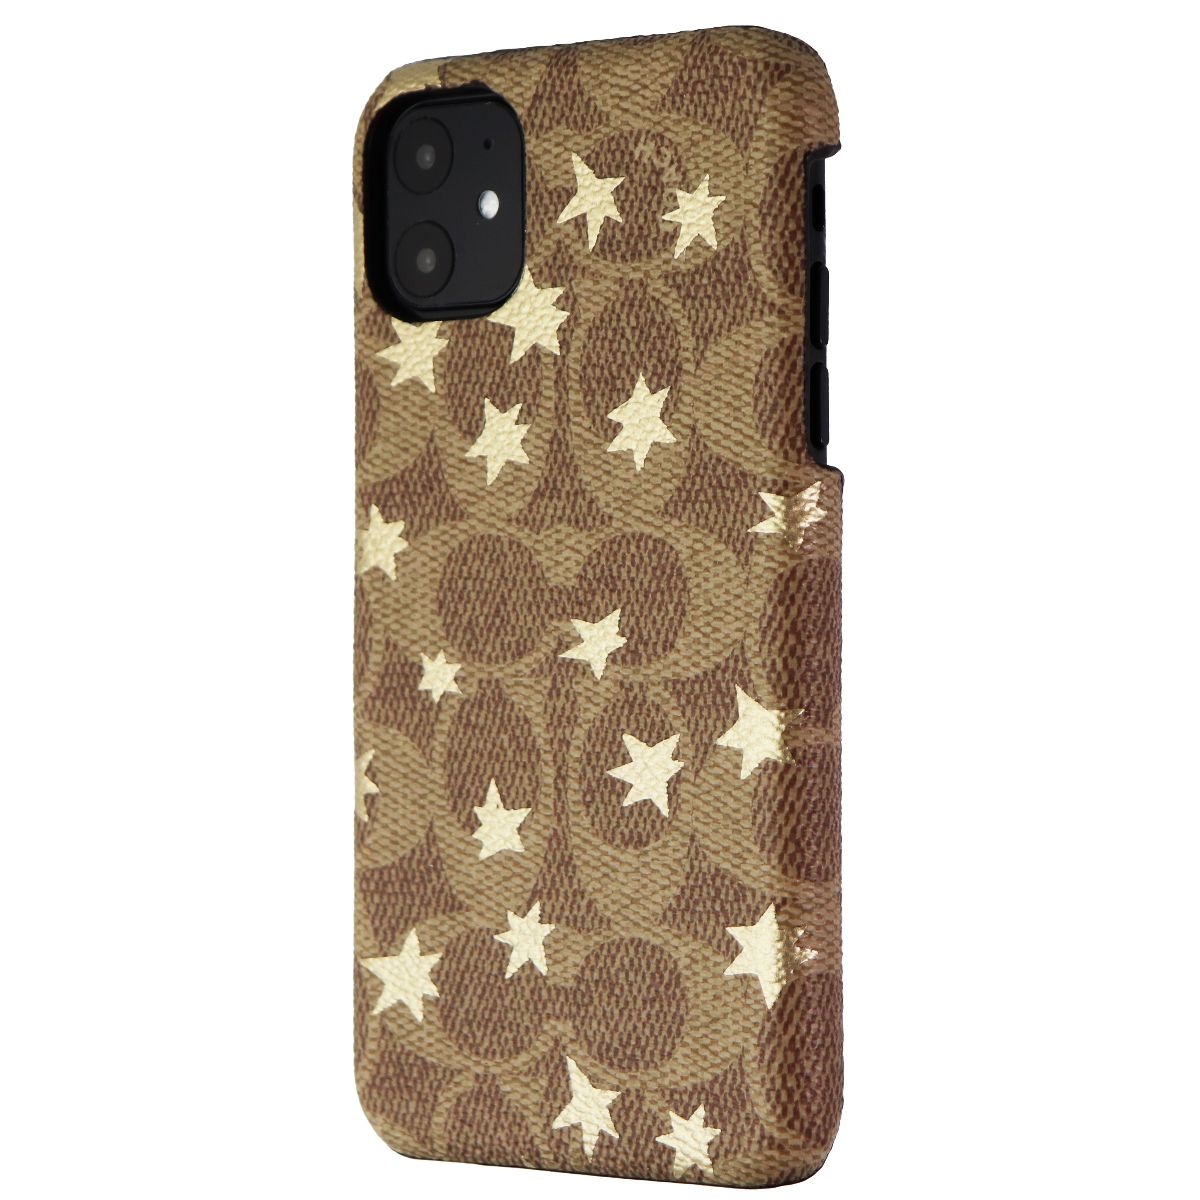 Coach Slim Wrap Case for Apple iPhone 11 Smartphones - Khaki / Gold Foil Stars - image 1 of 2